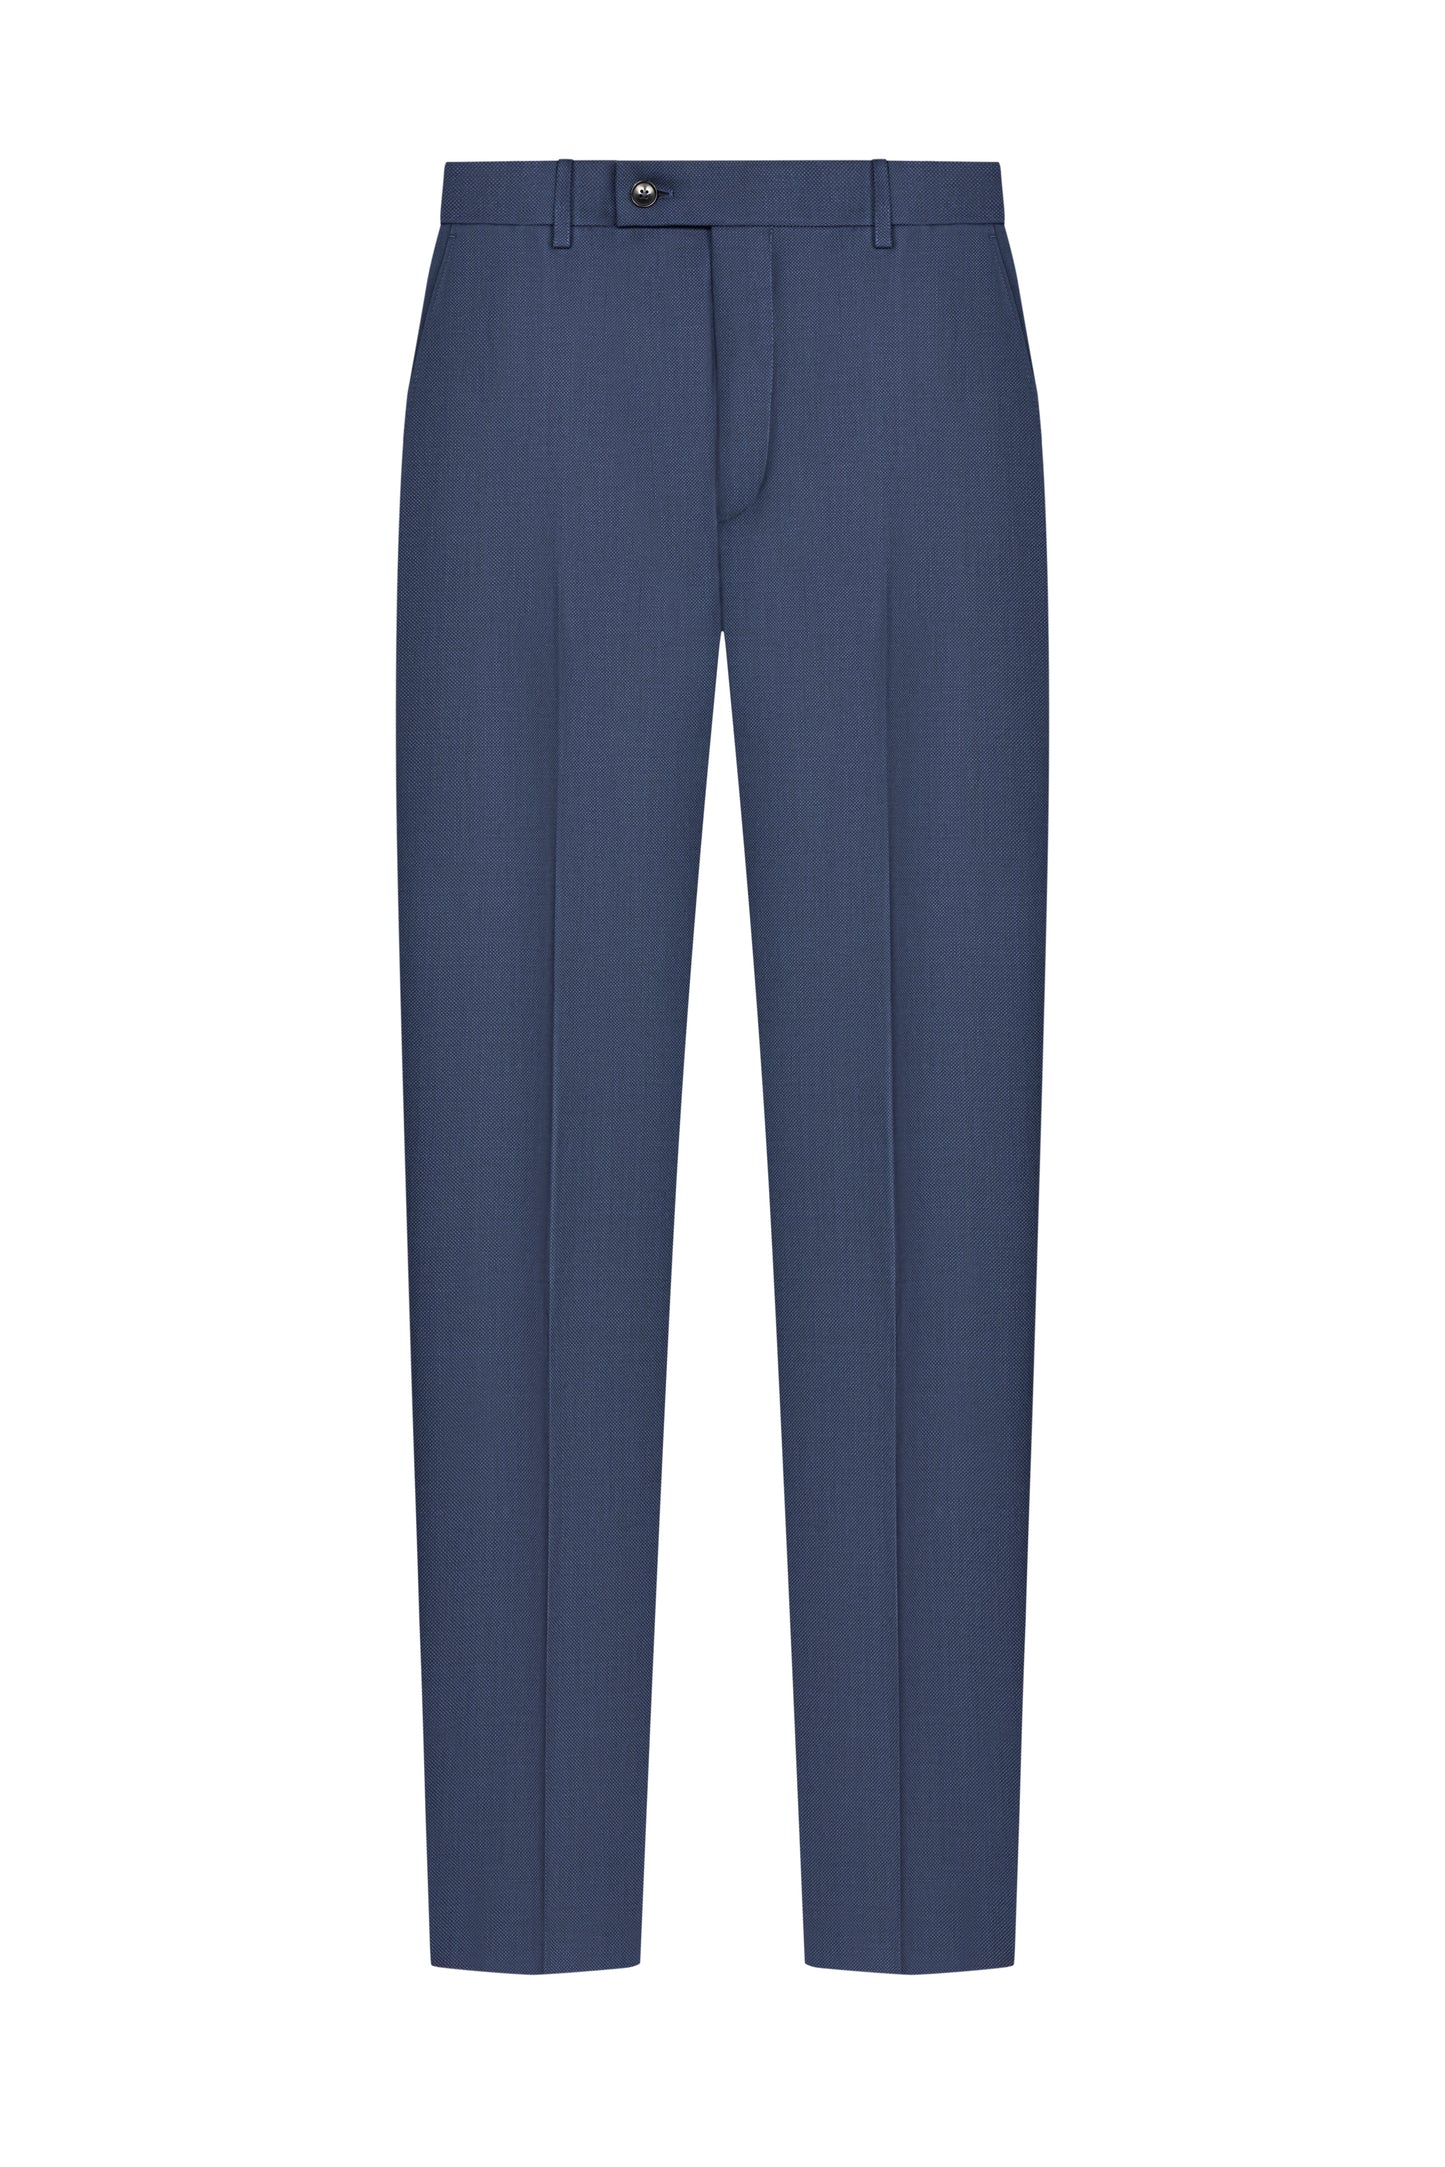 Navy Blue Birdseye Trouser